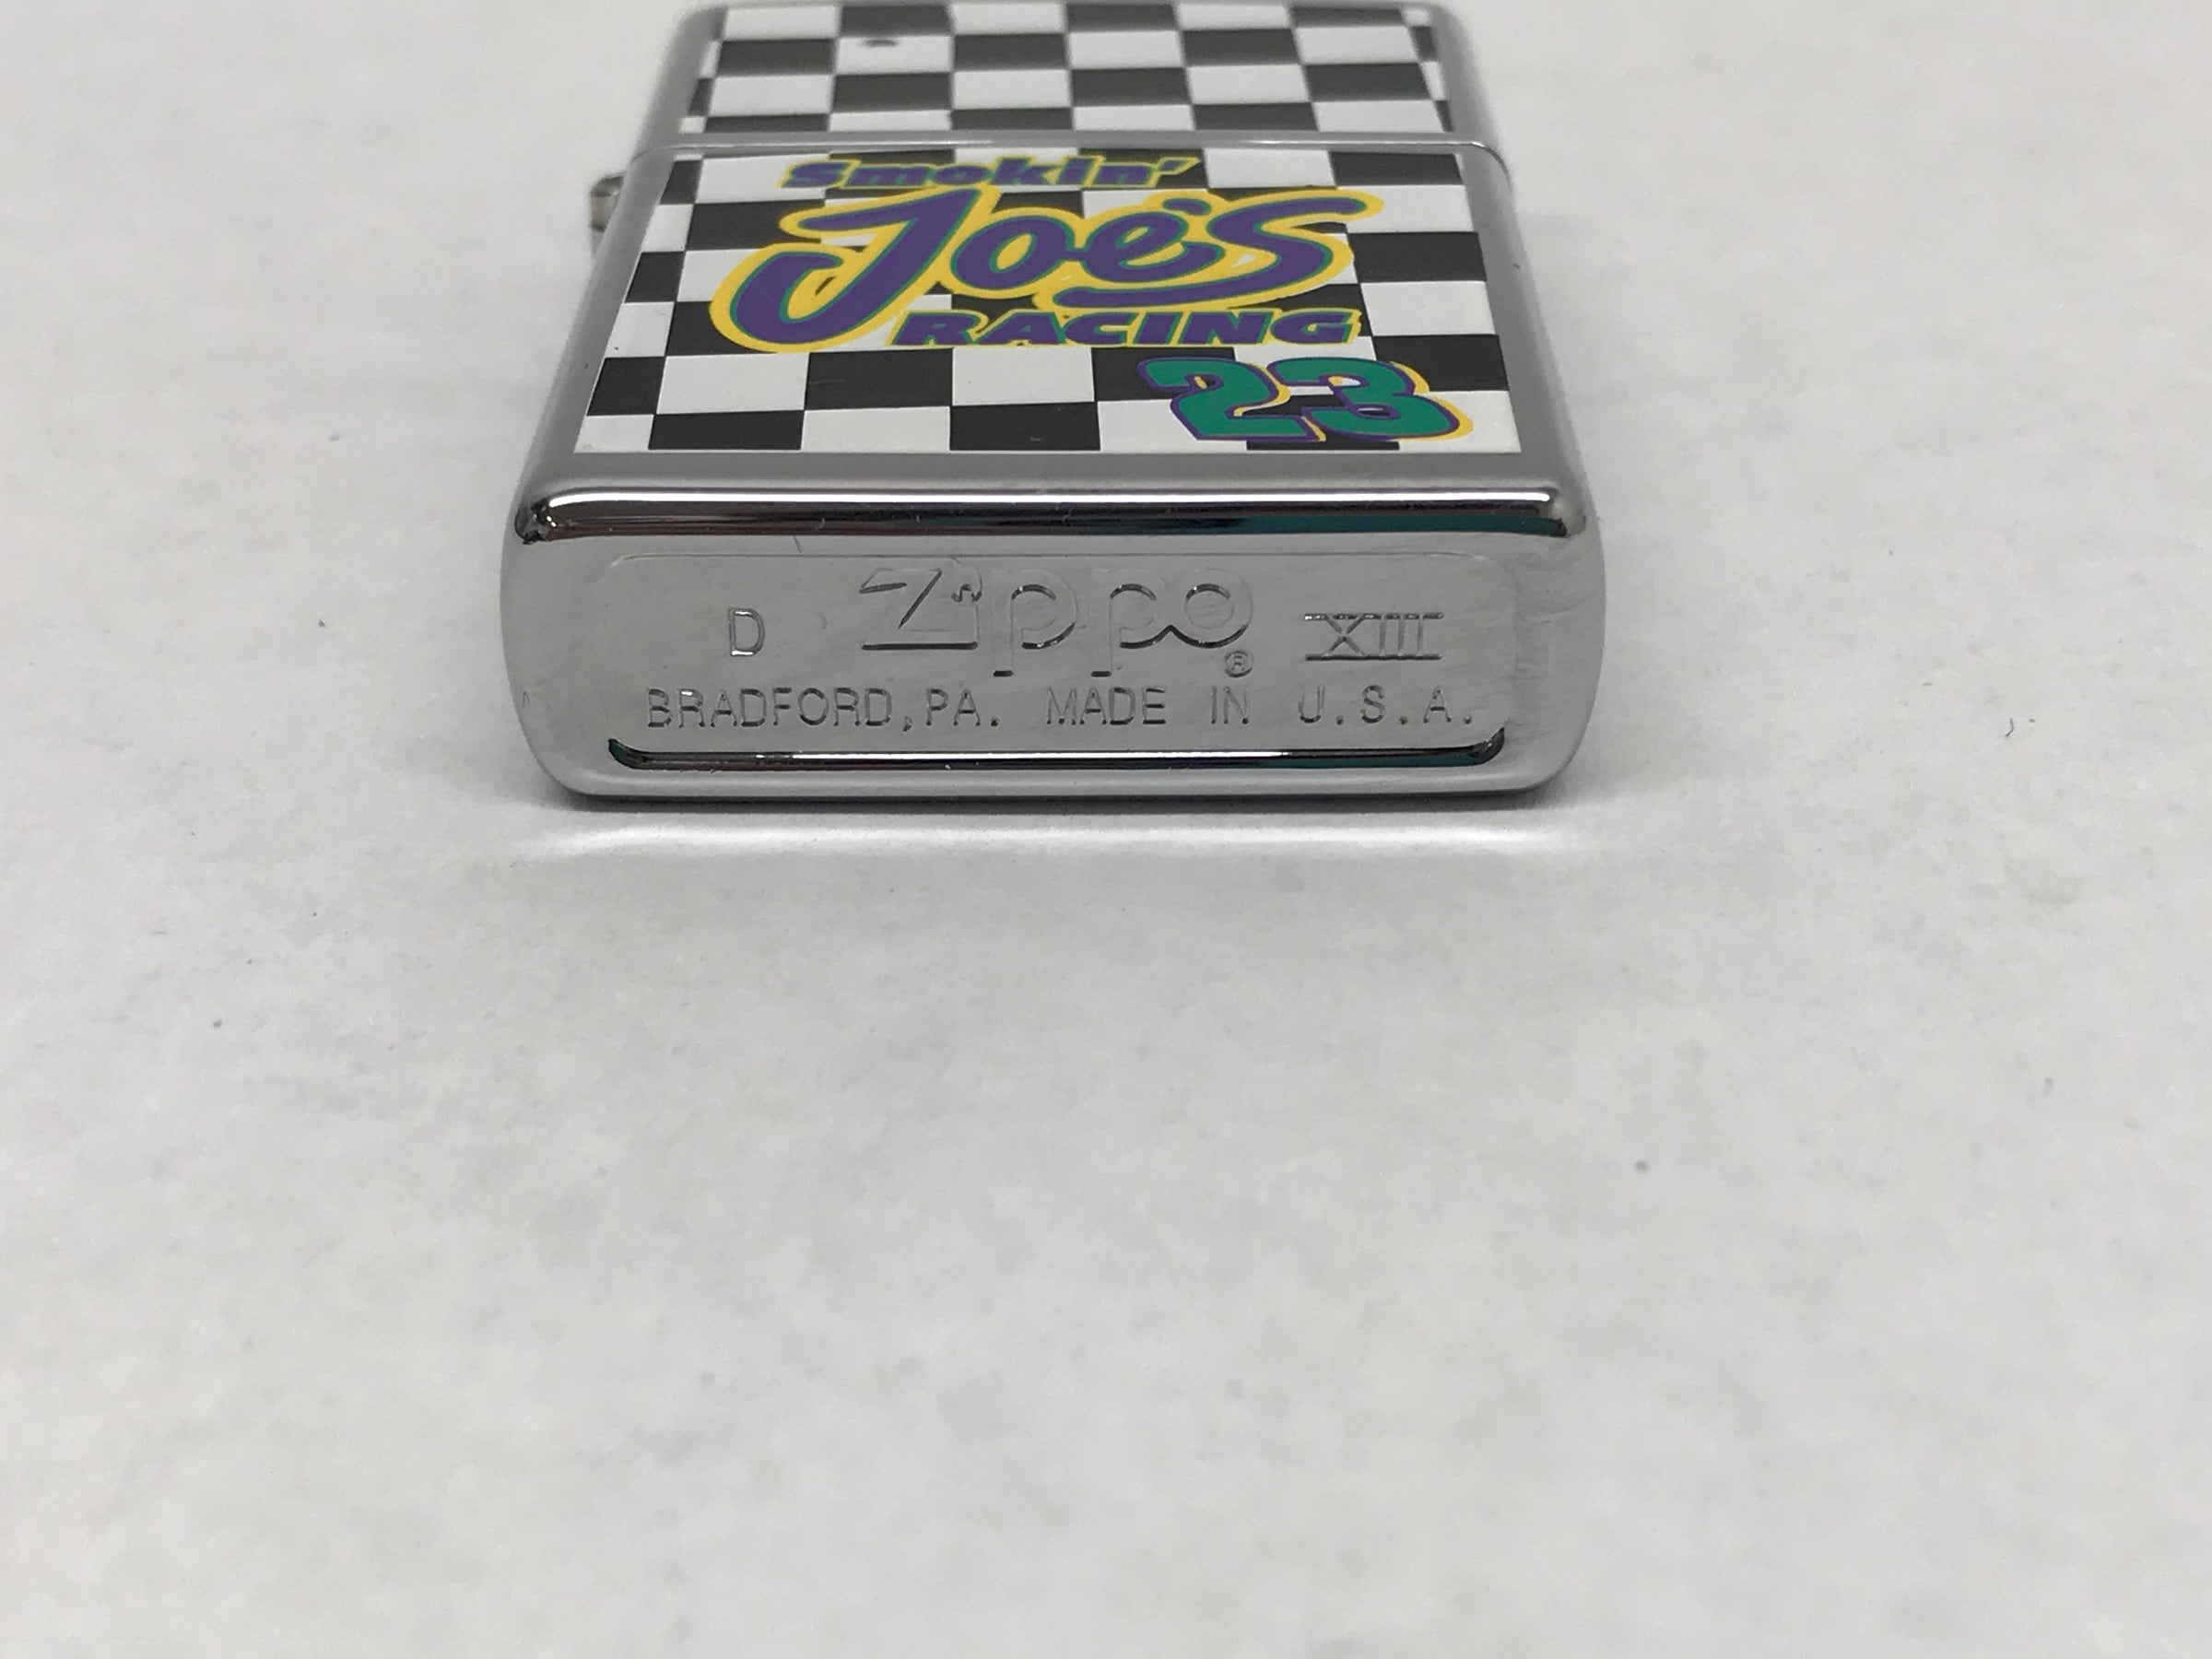 1997 Smokin' Joe's Racing #23 Checkered Flag Zippo Lighter